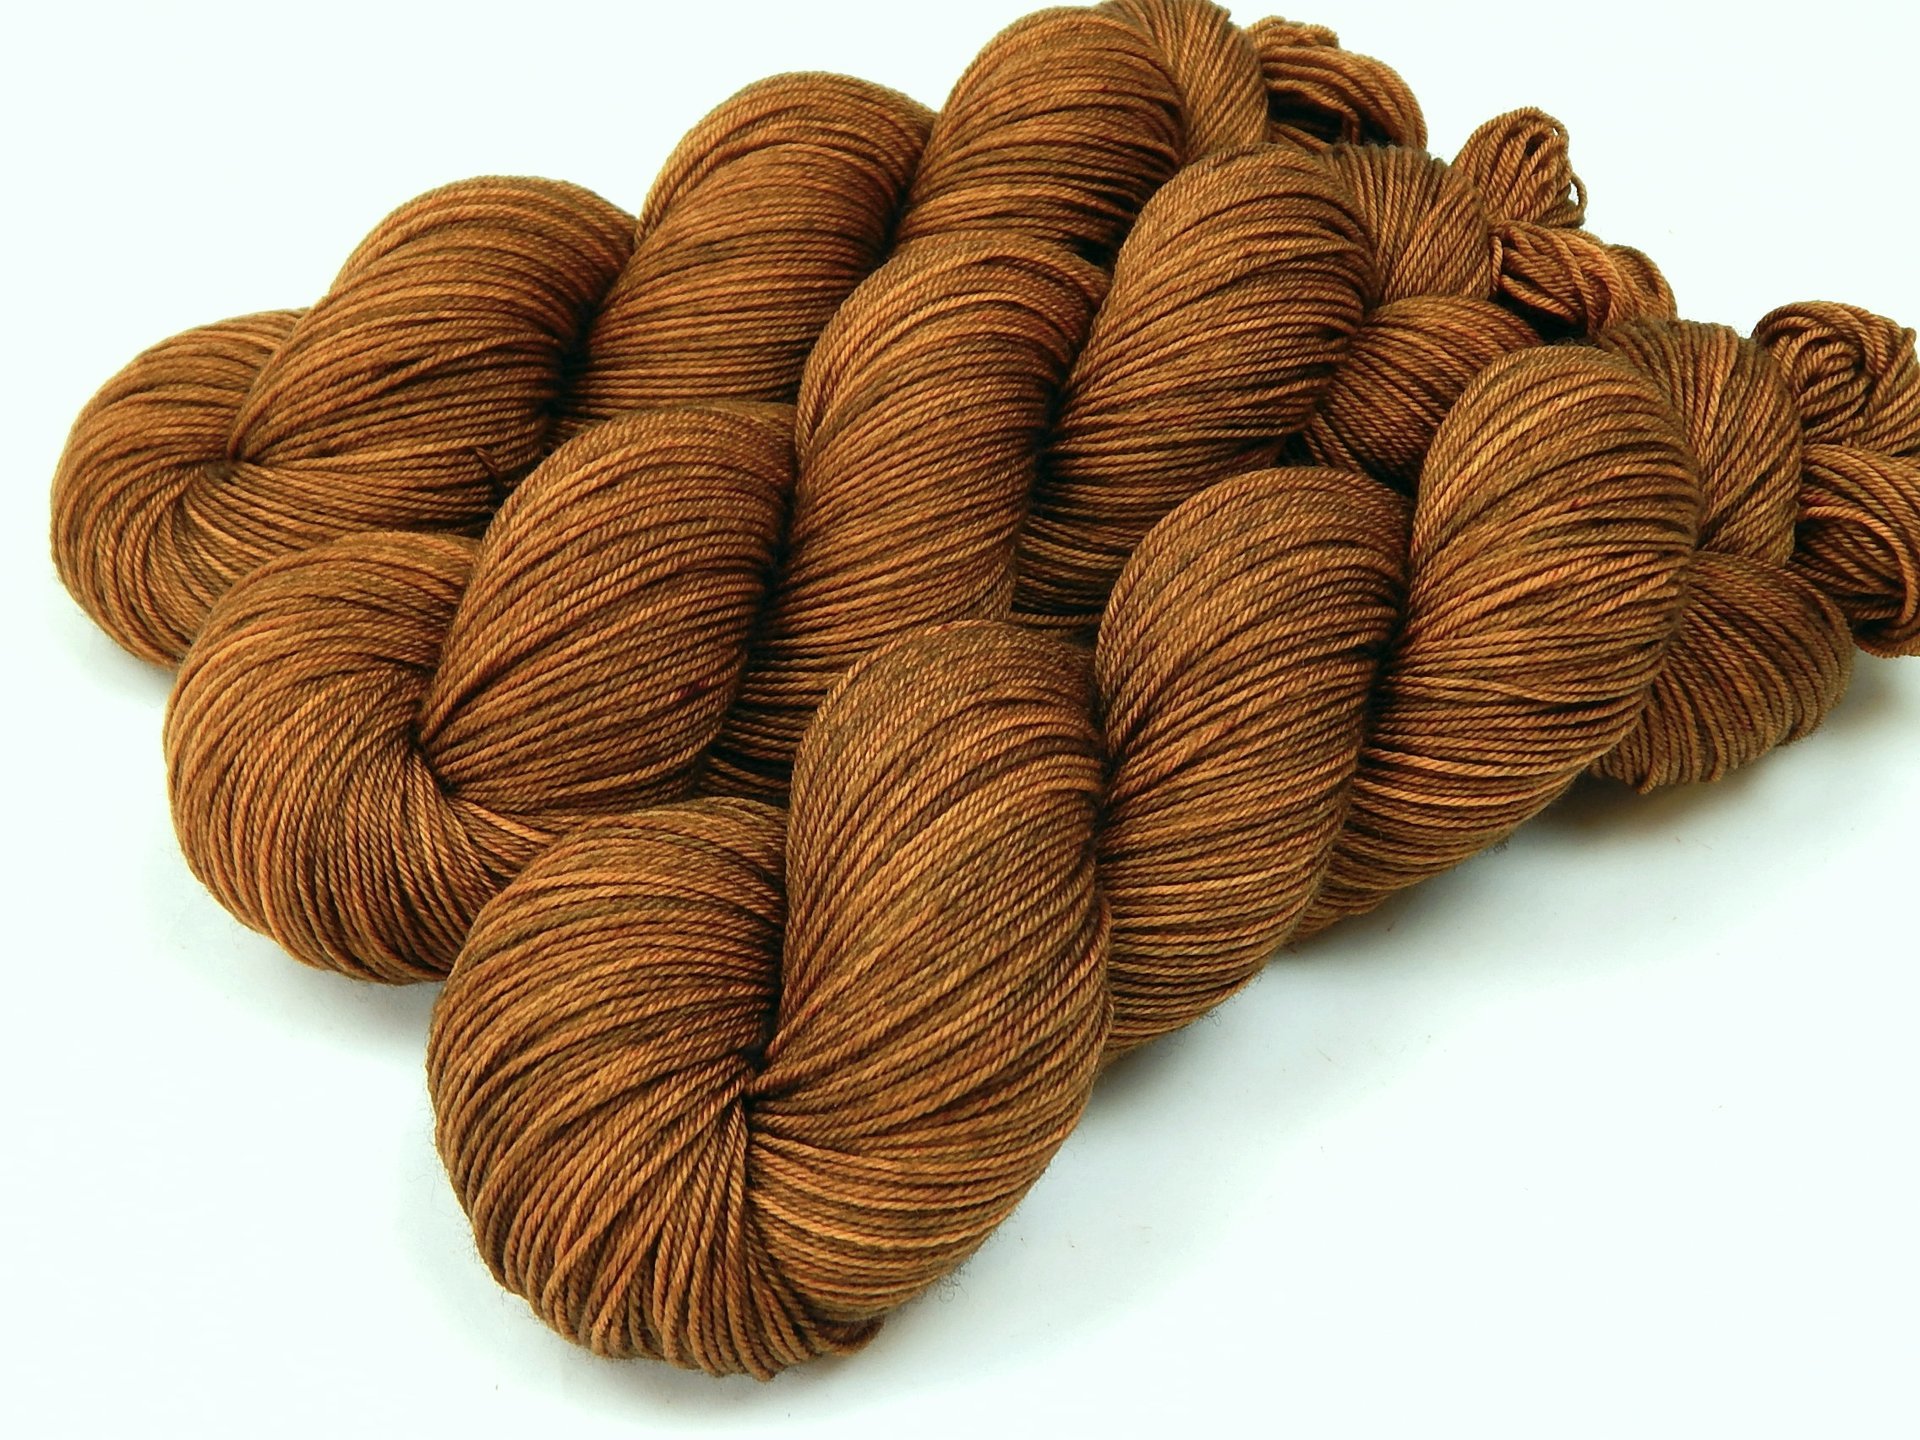 Hand Dyed Yarn, Sock Fingering Weight 4 Ply Superwash Merino Wool - Hazelnut - Indie Knitting Yarn, Warm Brown Tonal Handdyed Sock Yarn